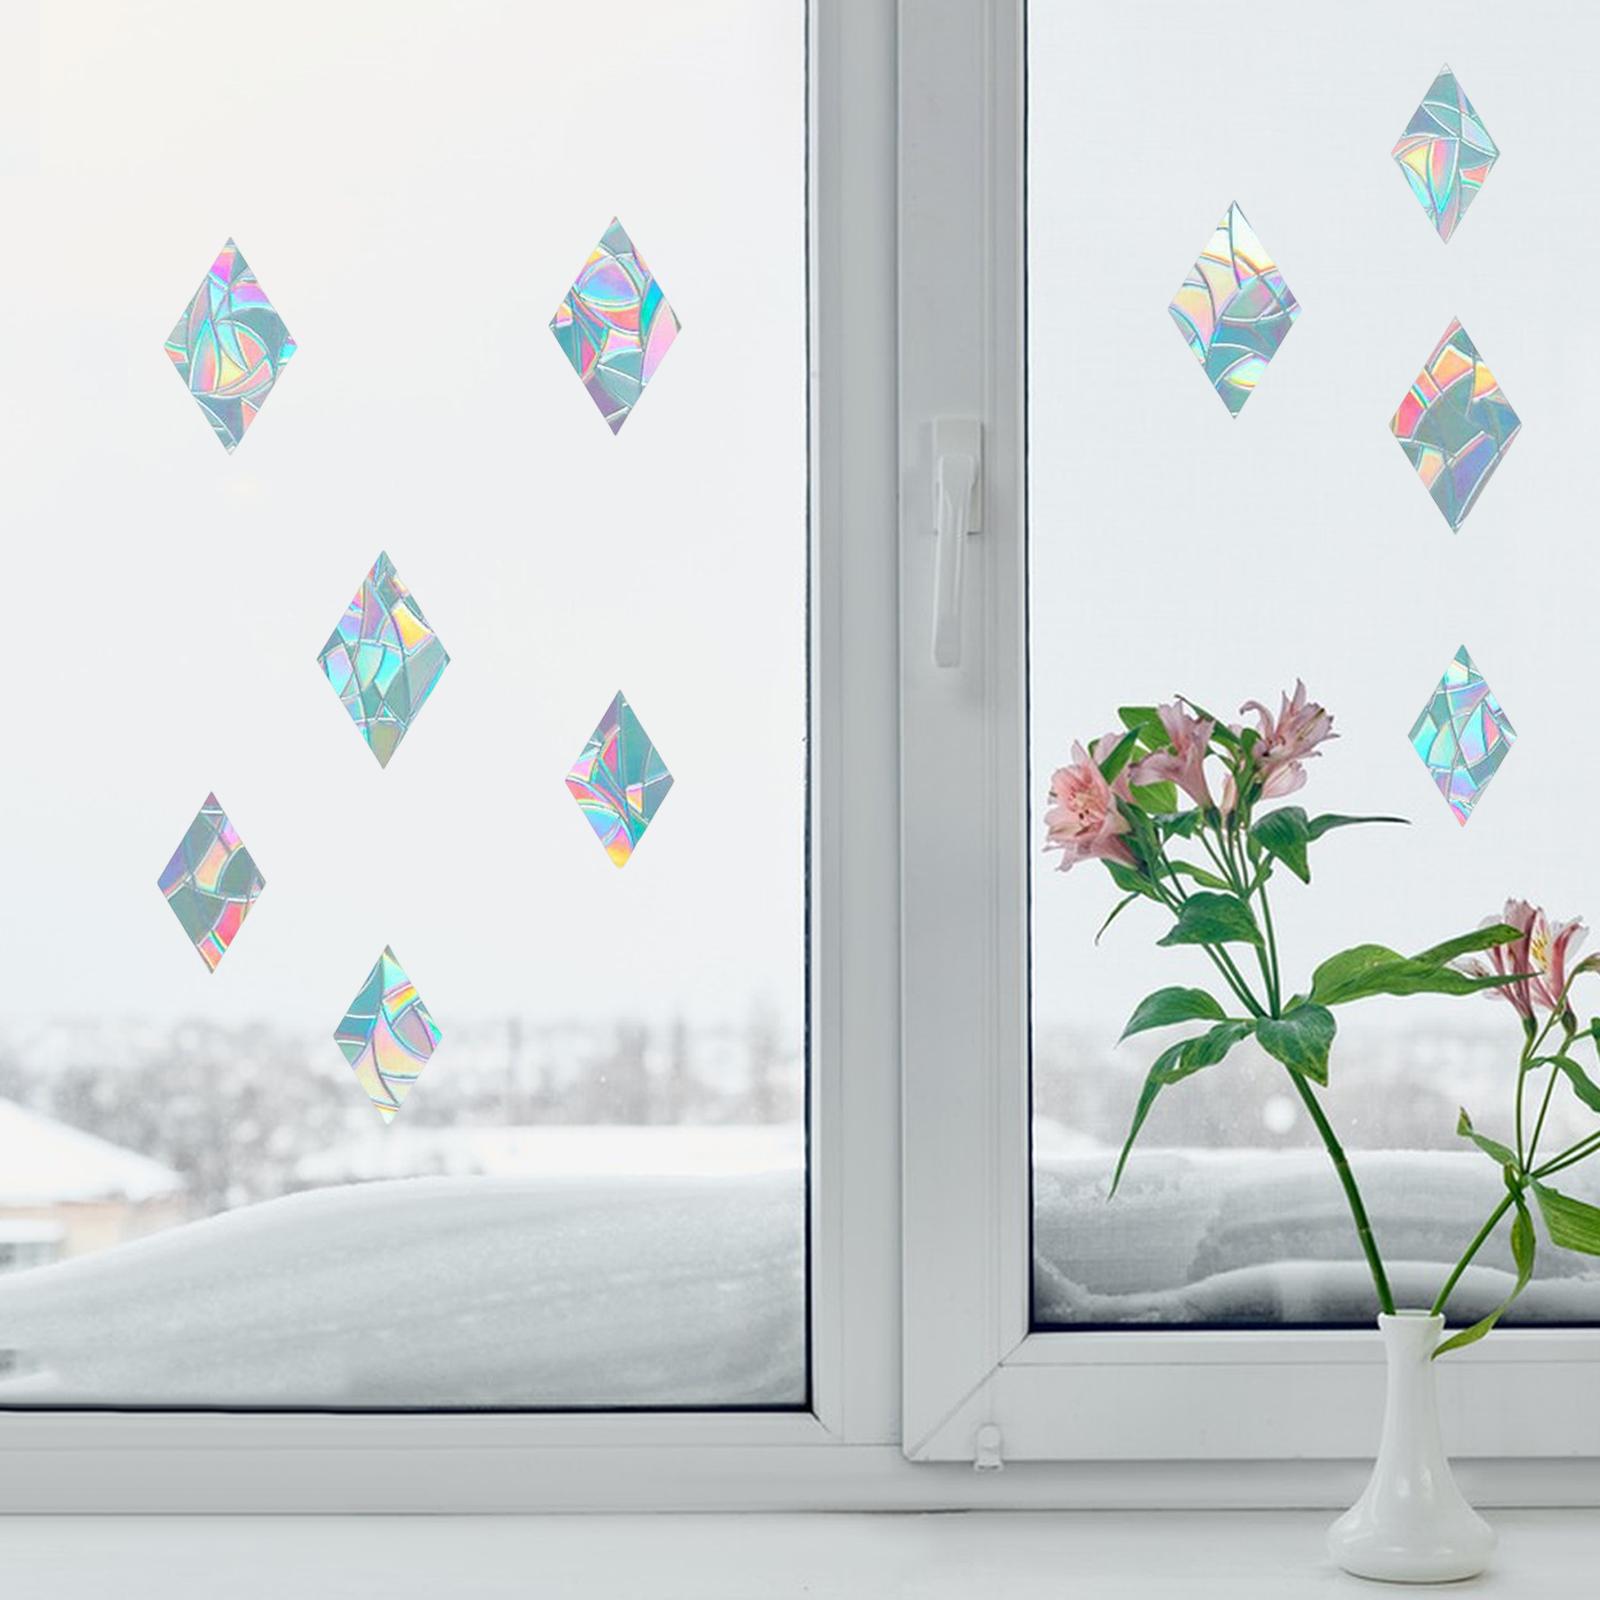 Static Rainbow Window Clings Stickers Decal Art Decor DIY Supplies Mural 10pcs Rhombus